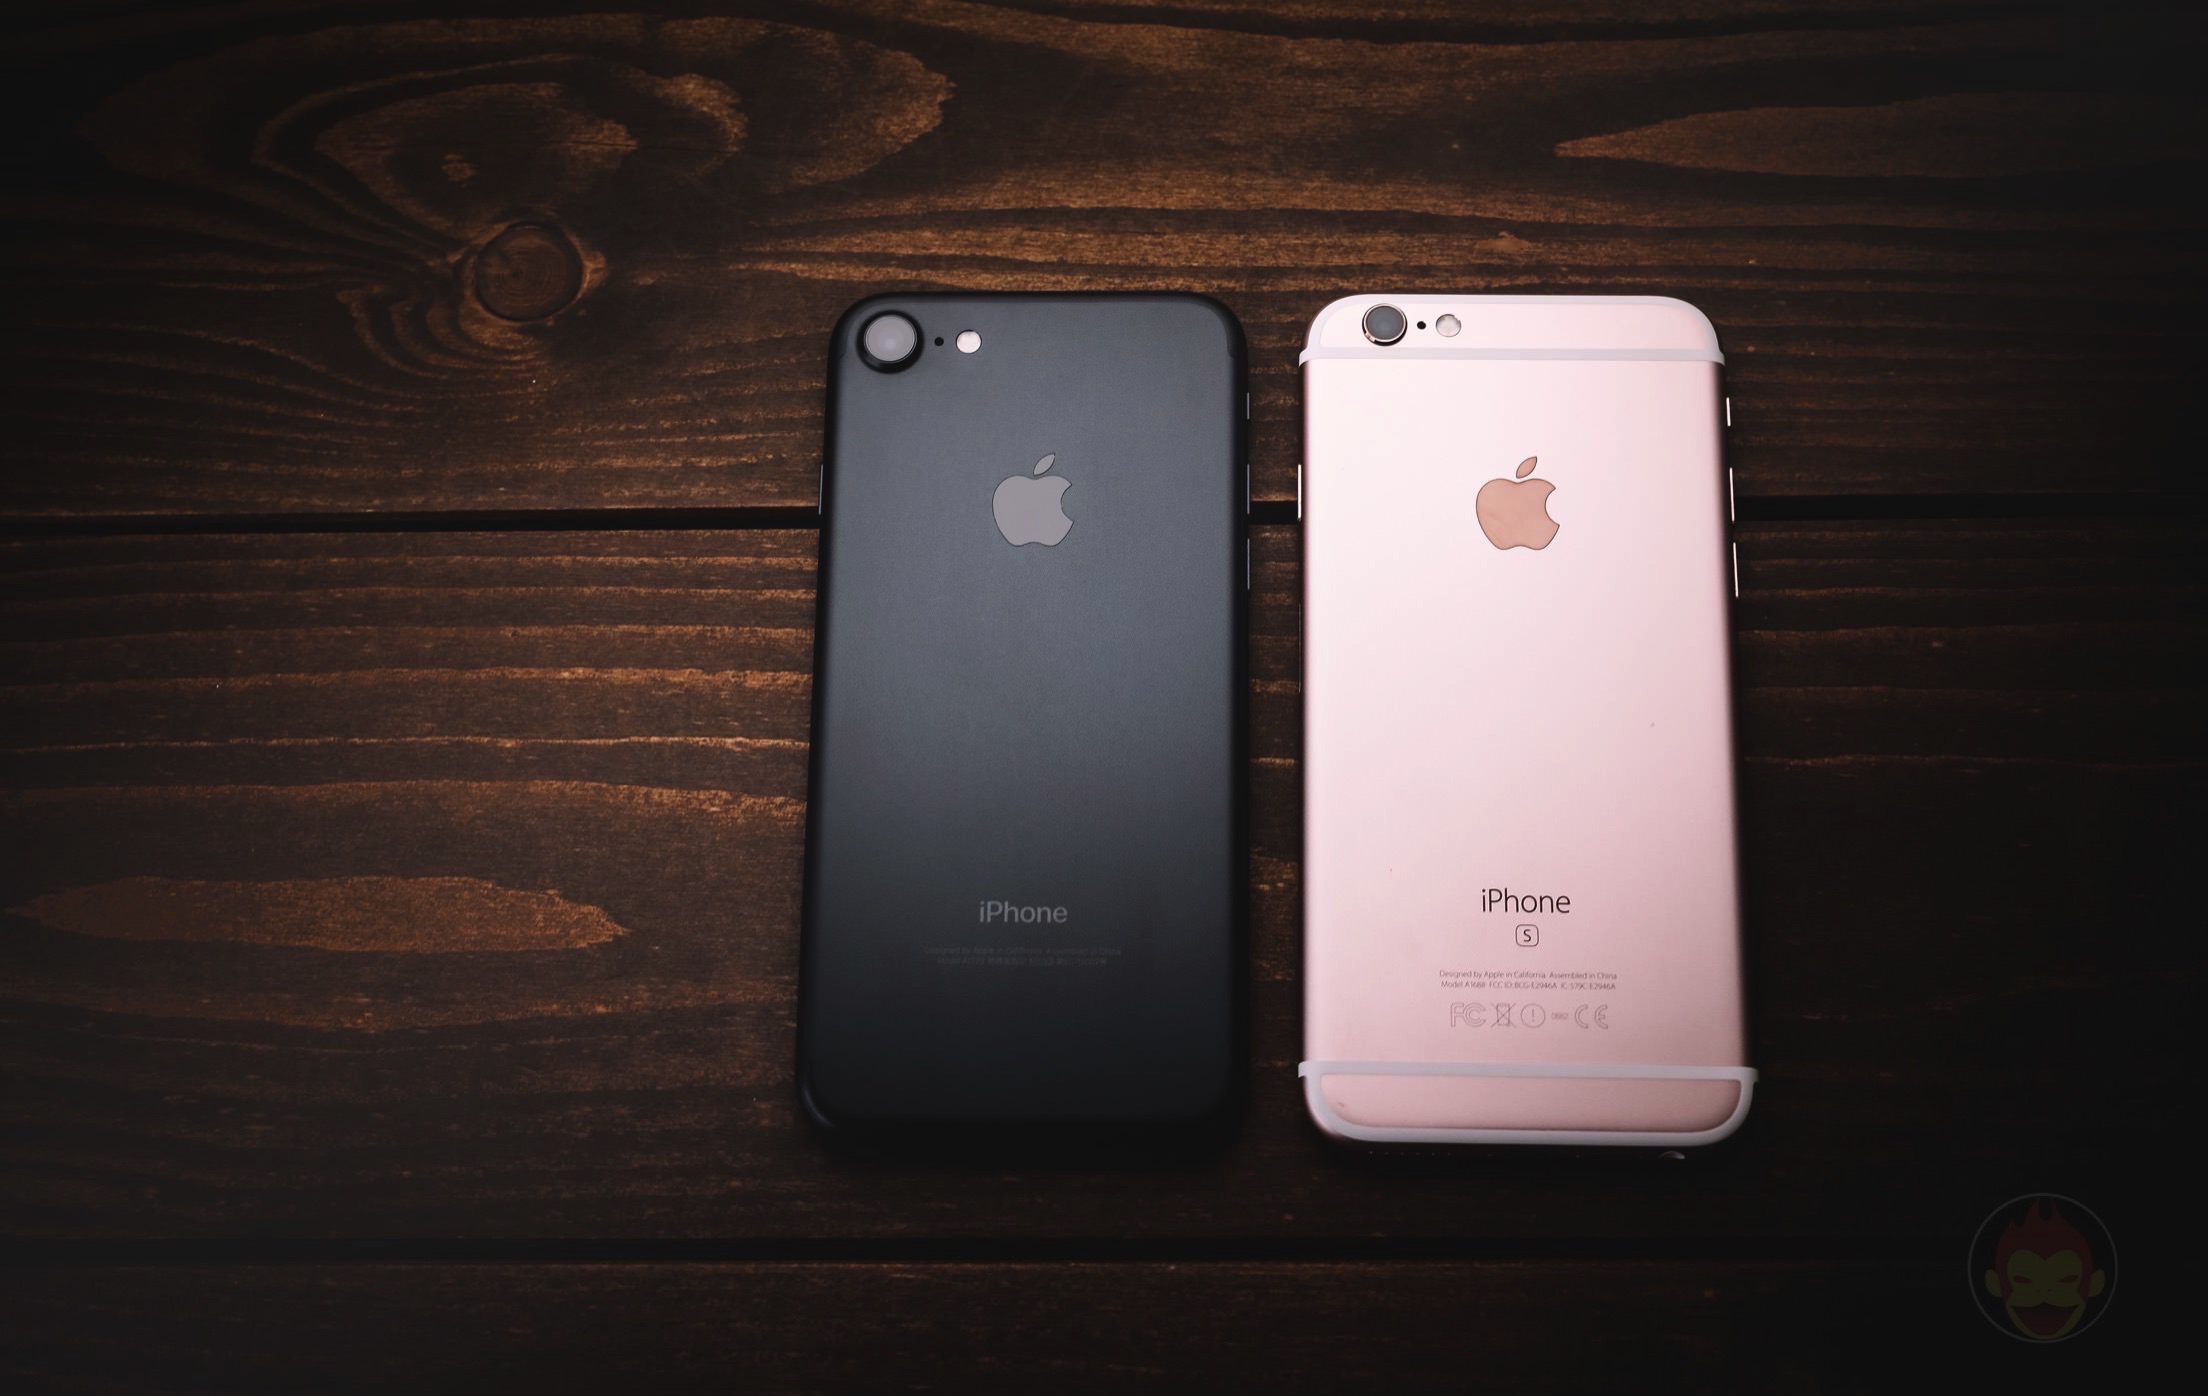 iPhone7-iPhone6s-Comparison-04.jpg